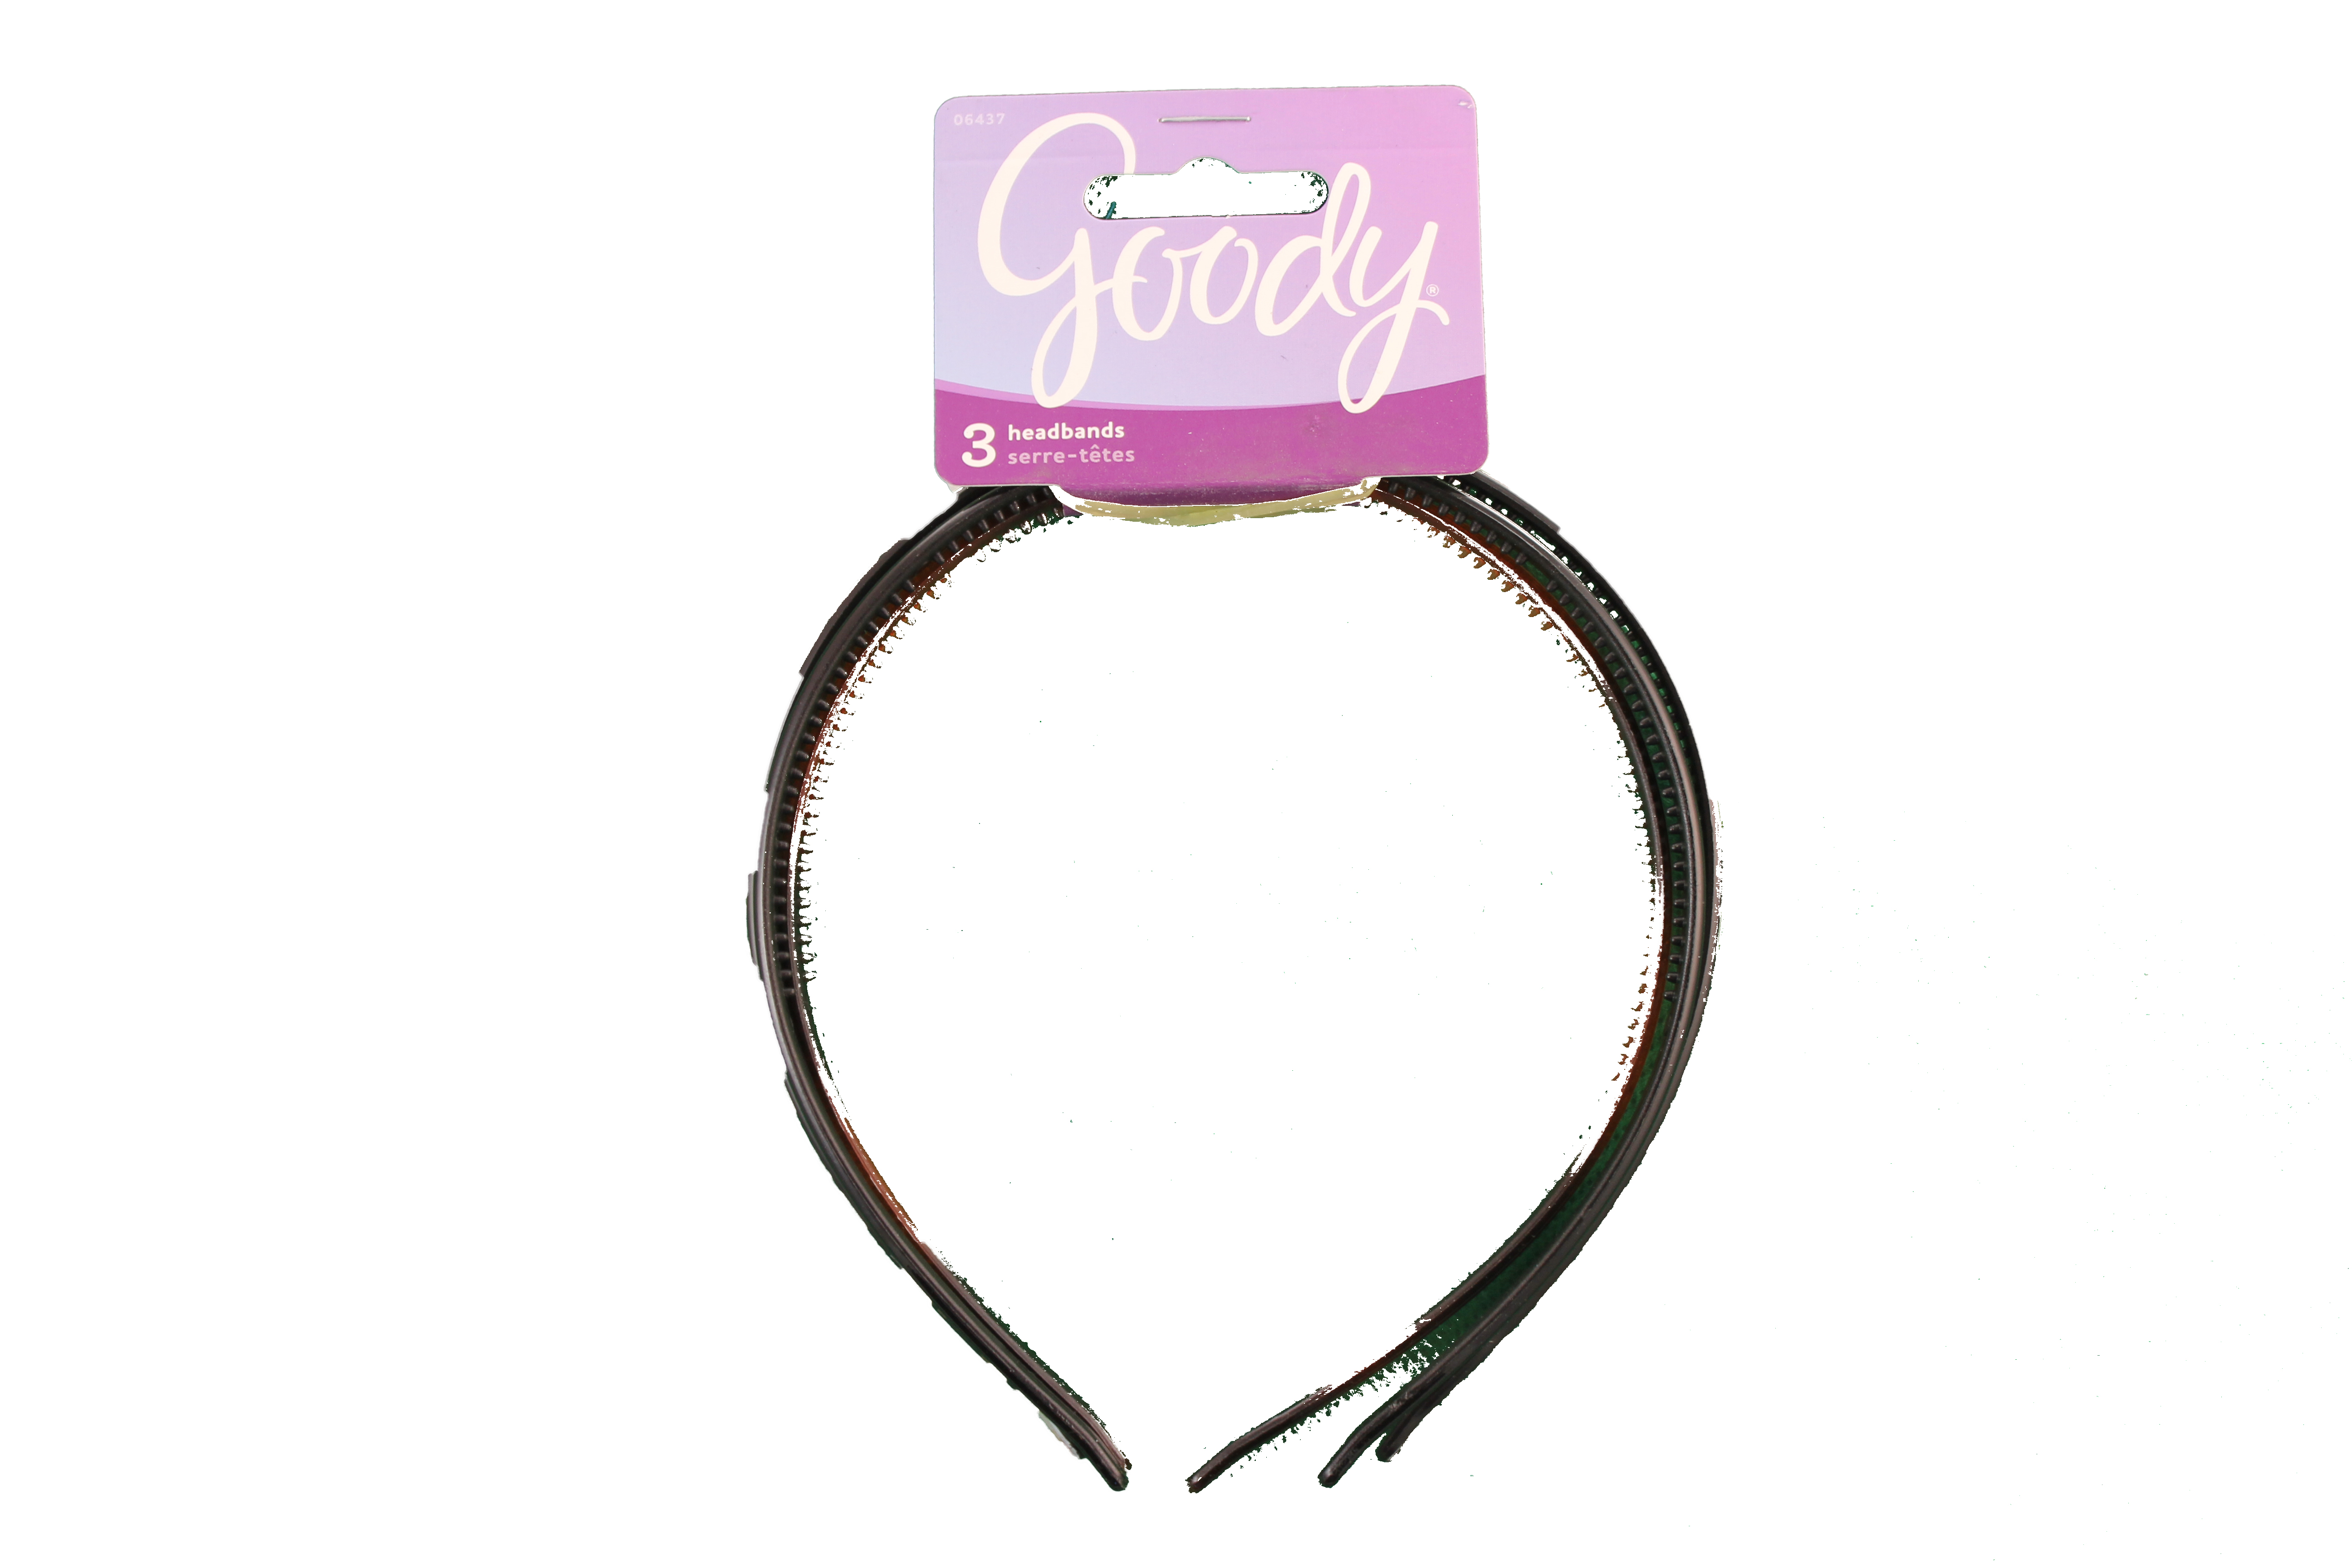 Goody Headbands With Teeth Cheetah Print Mix, 3 Per Card UPC:041457064375 Pack:72/3